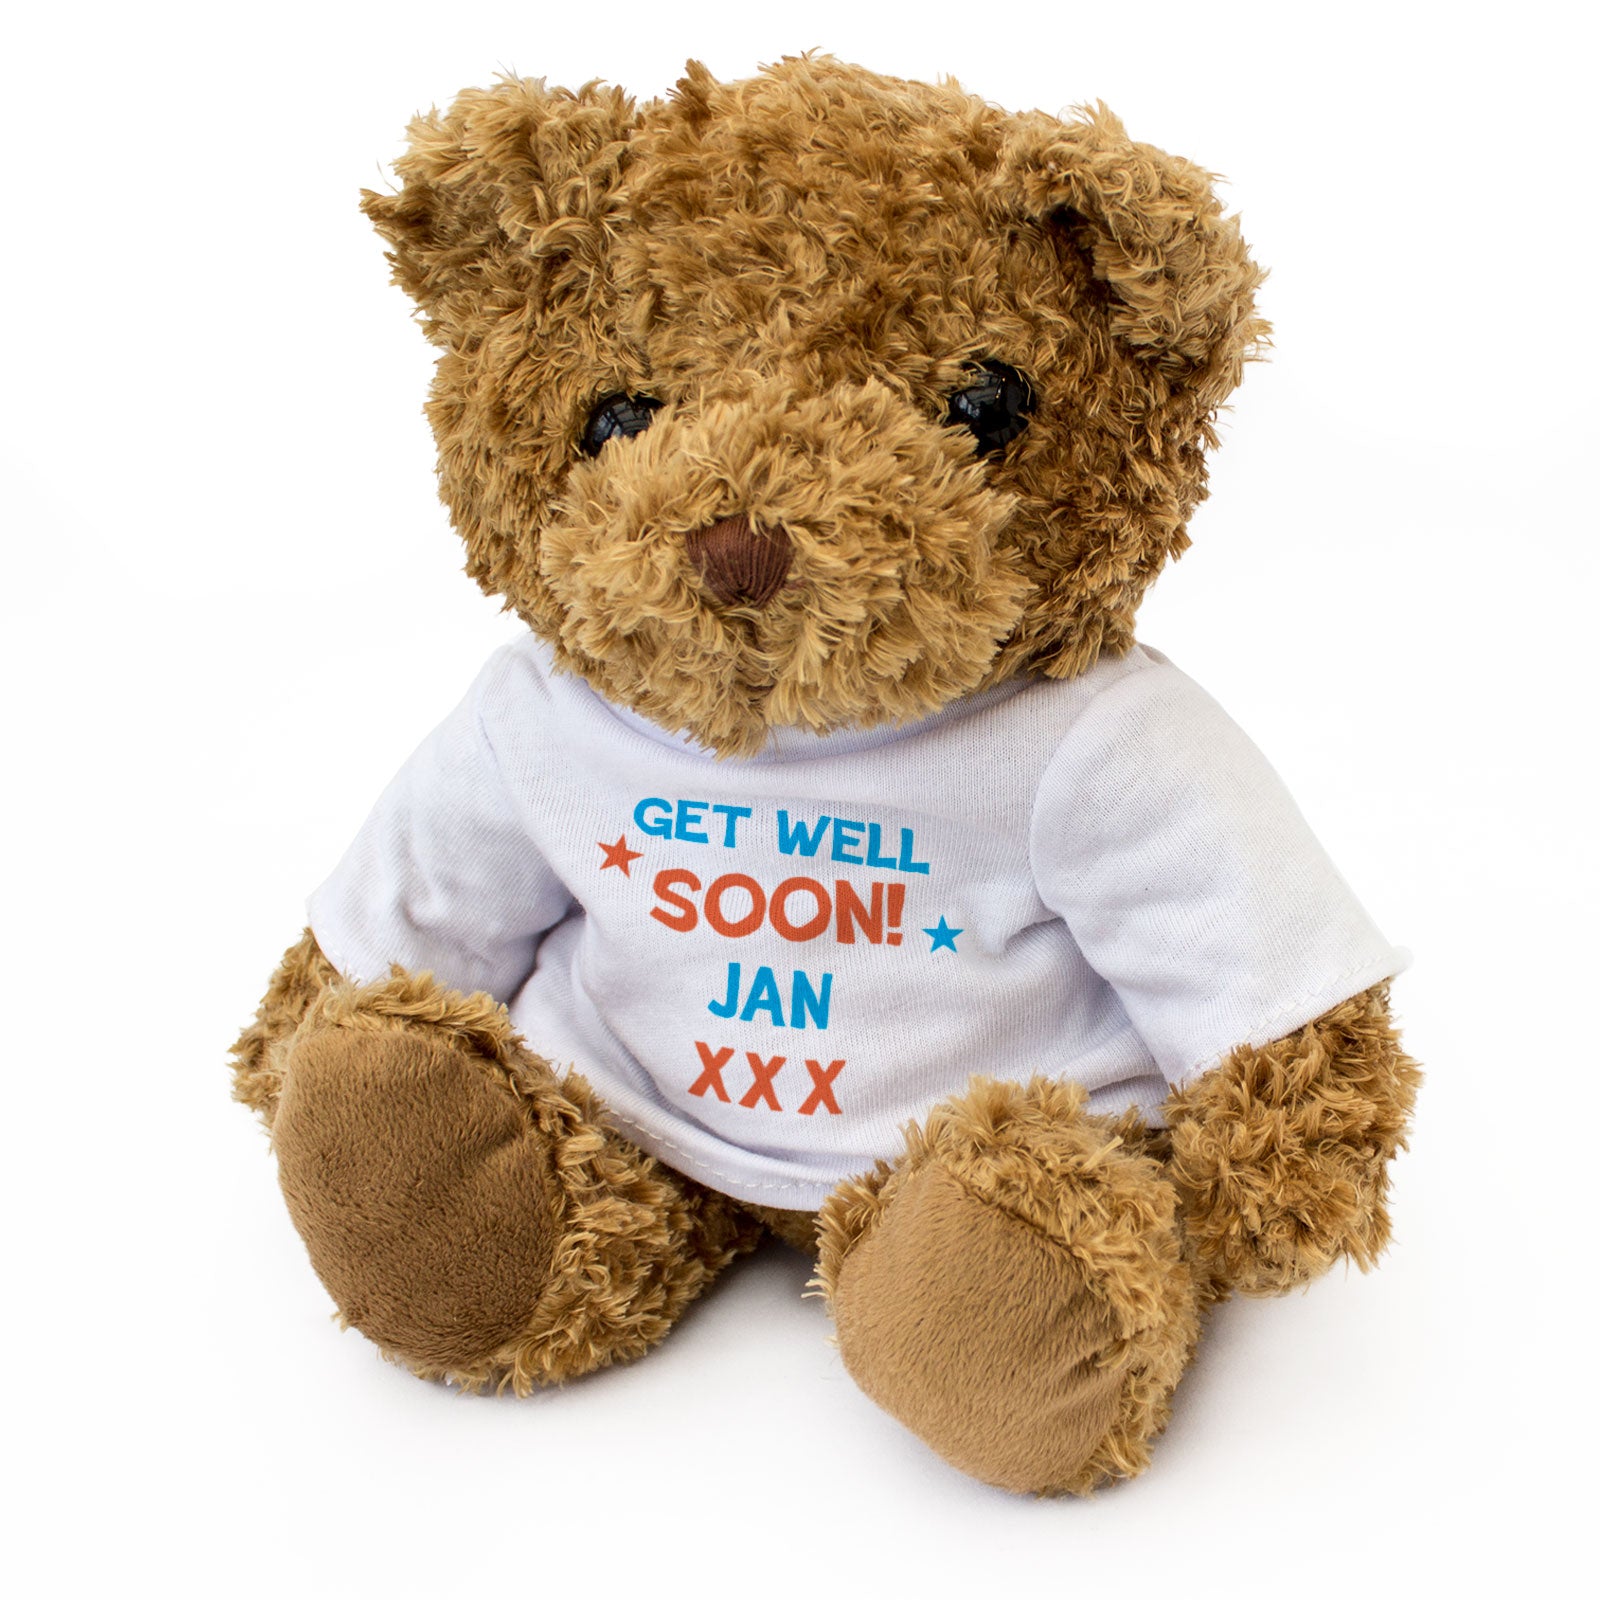 Get Well Soon Jan - Teddy Bear